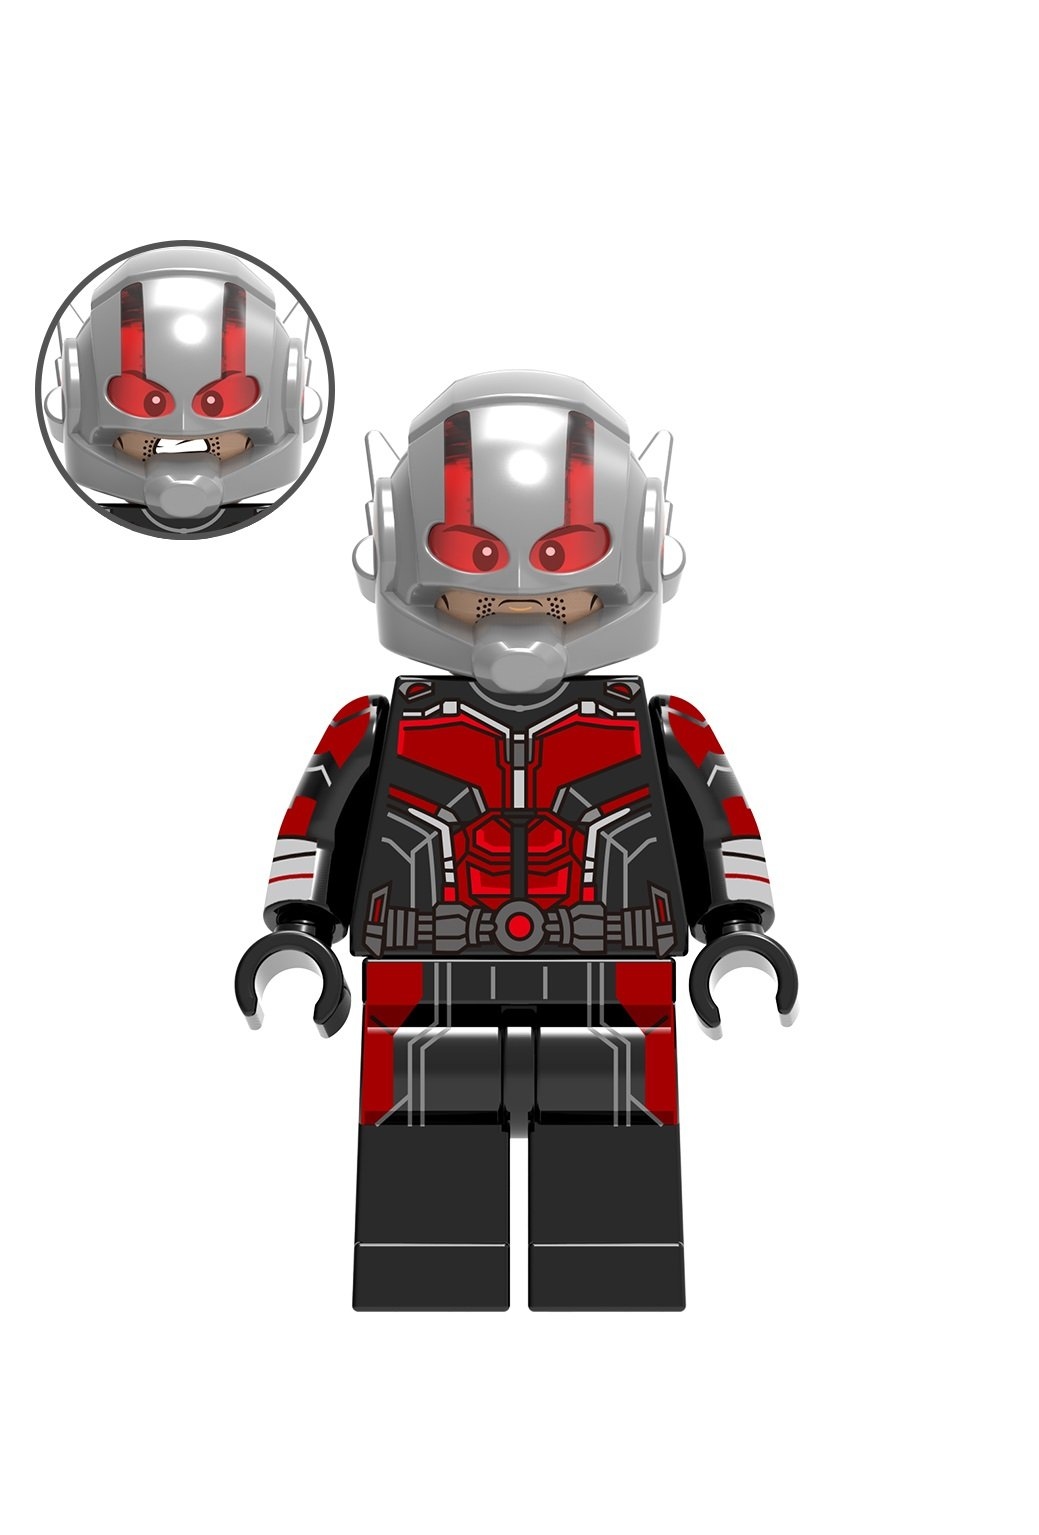 01Bigbricks Custom Ant-Man Minifigures Fit Lego Xh869